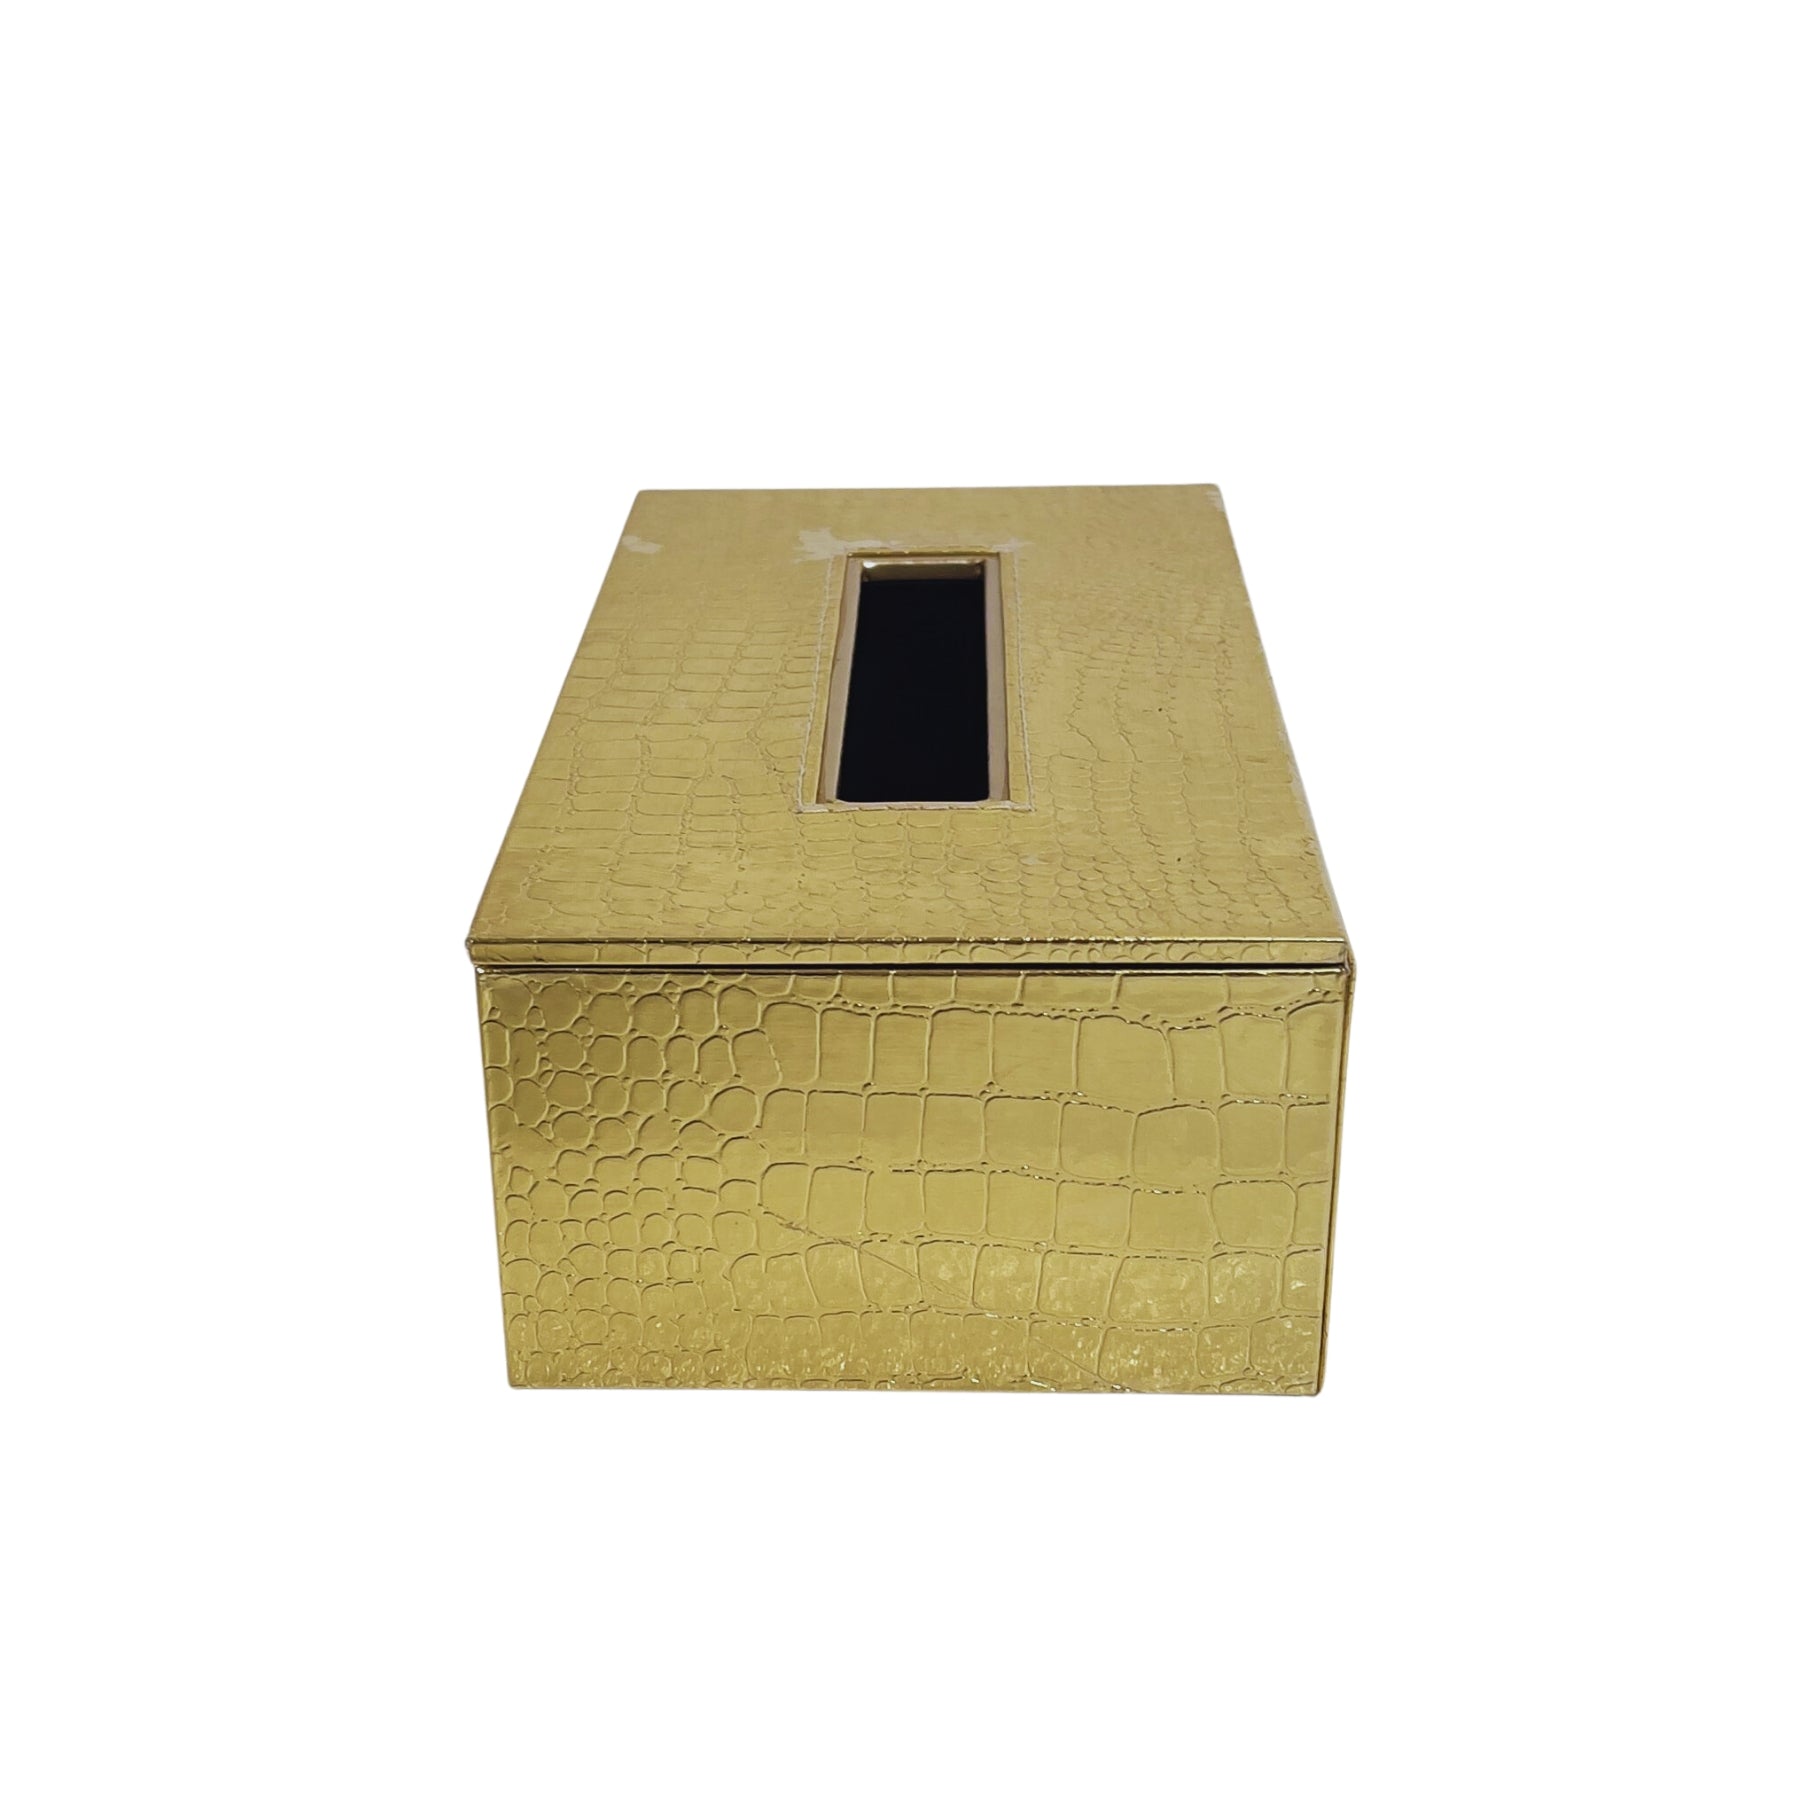 Leather Tissue box - Gold Croco